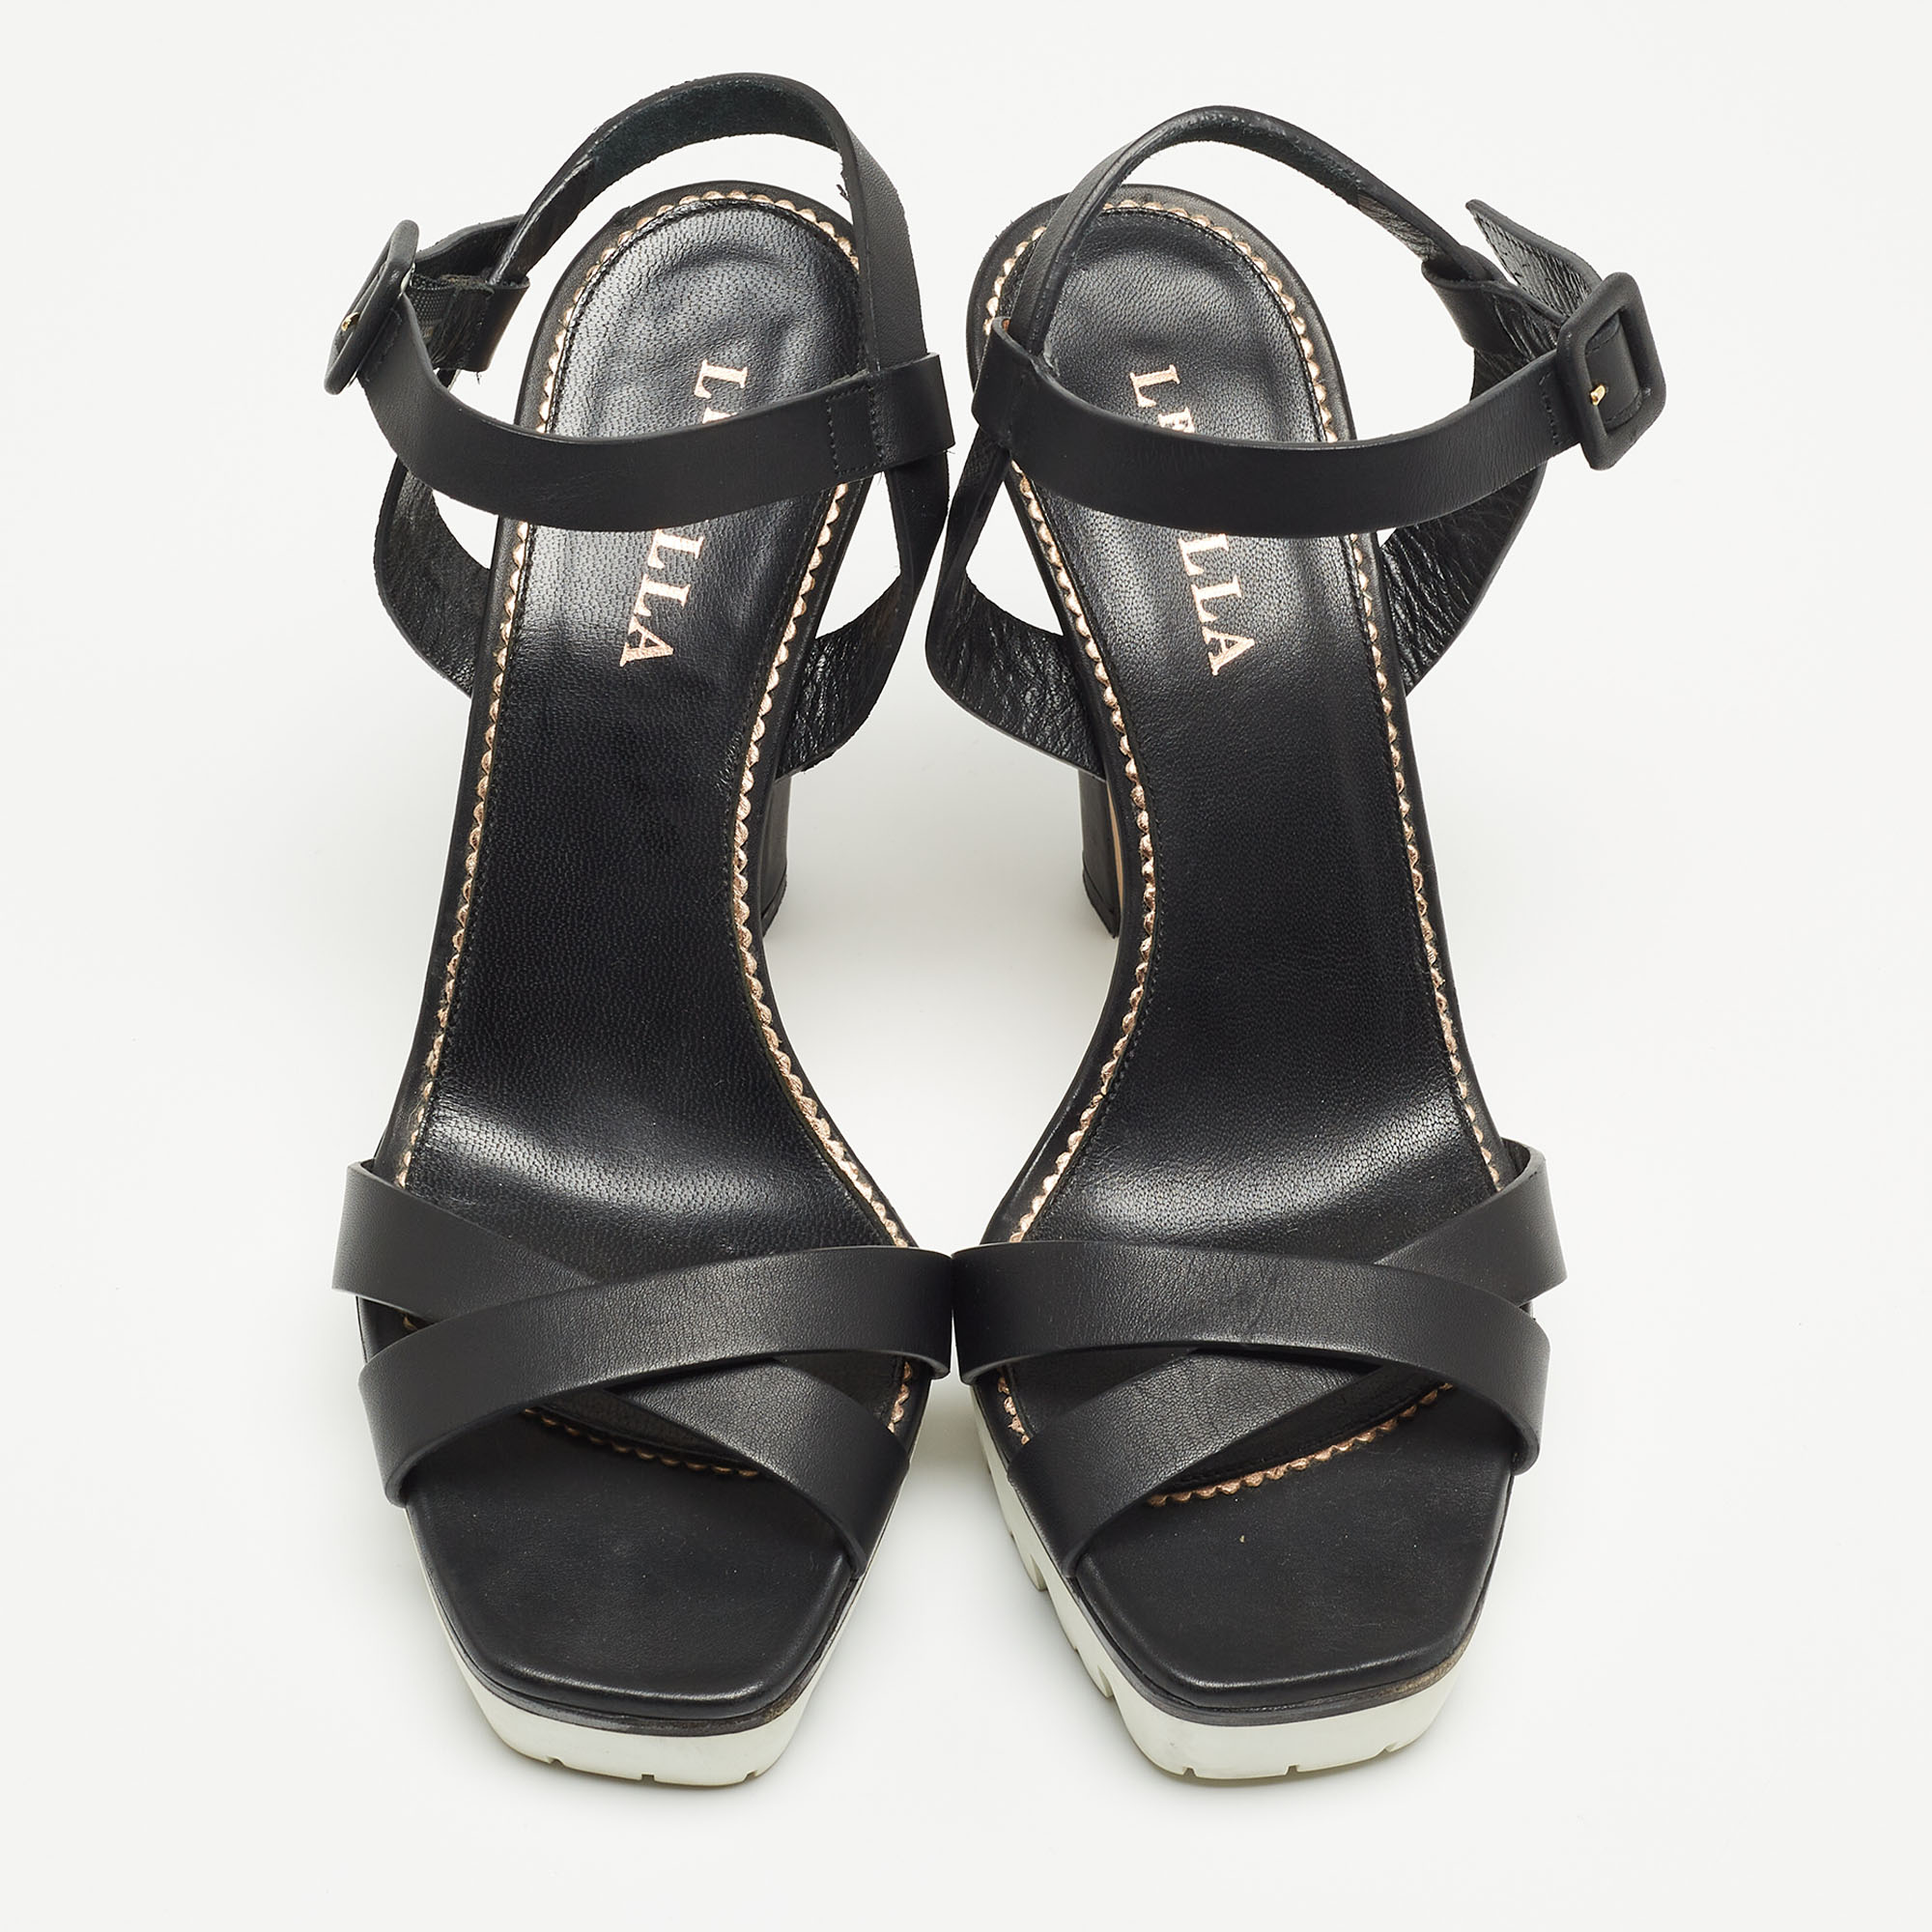 Le Silla Black Leather Ankle Strap Sandals Size 40